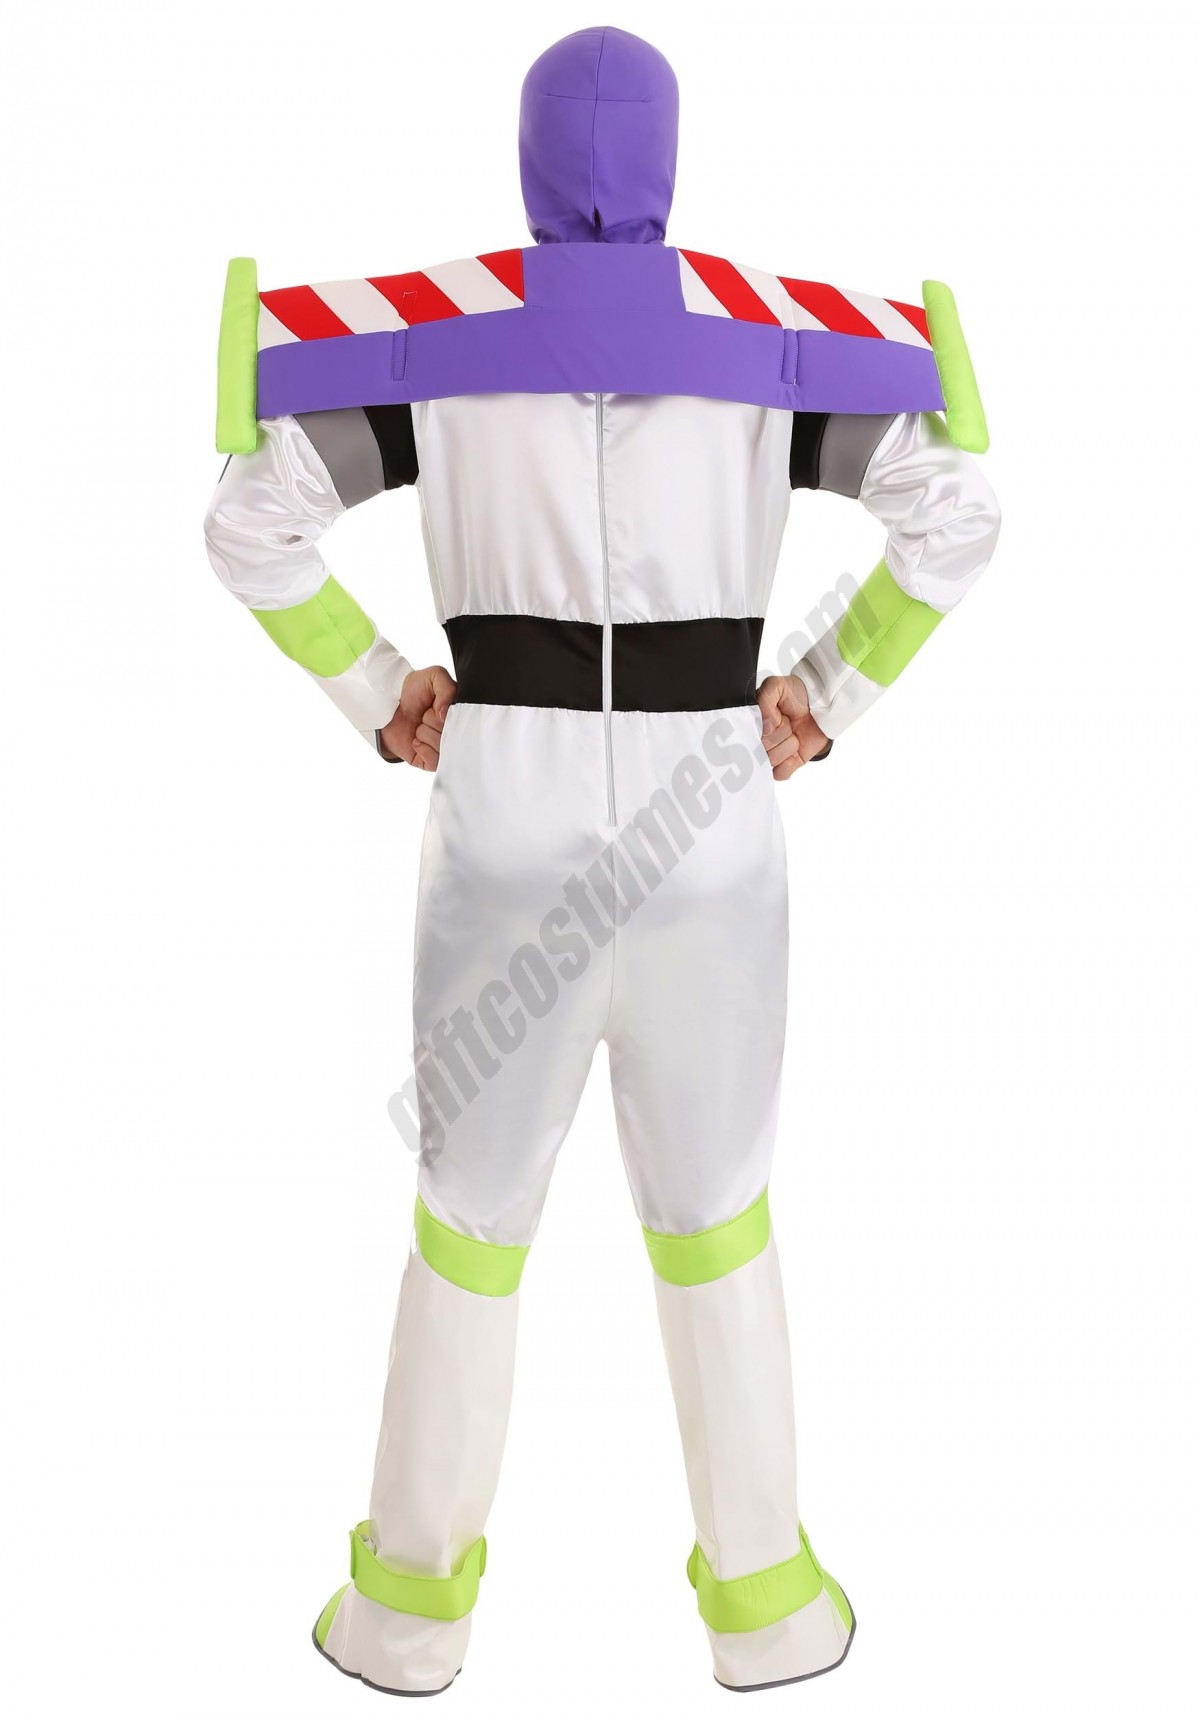 Prestige Buzz Lightyear Costume for Adult Men Promotions - -8